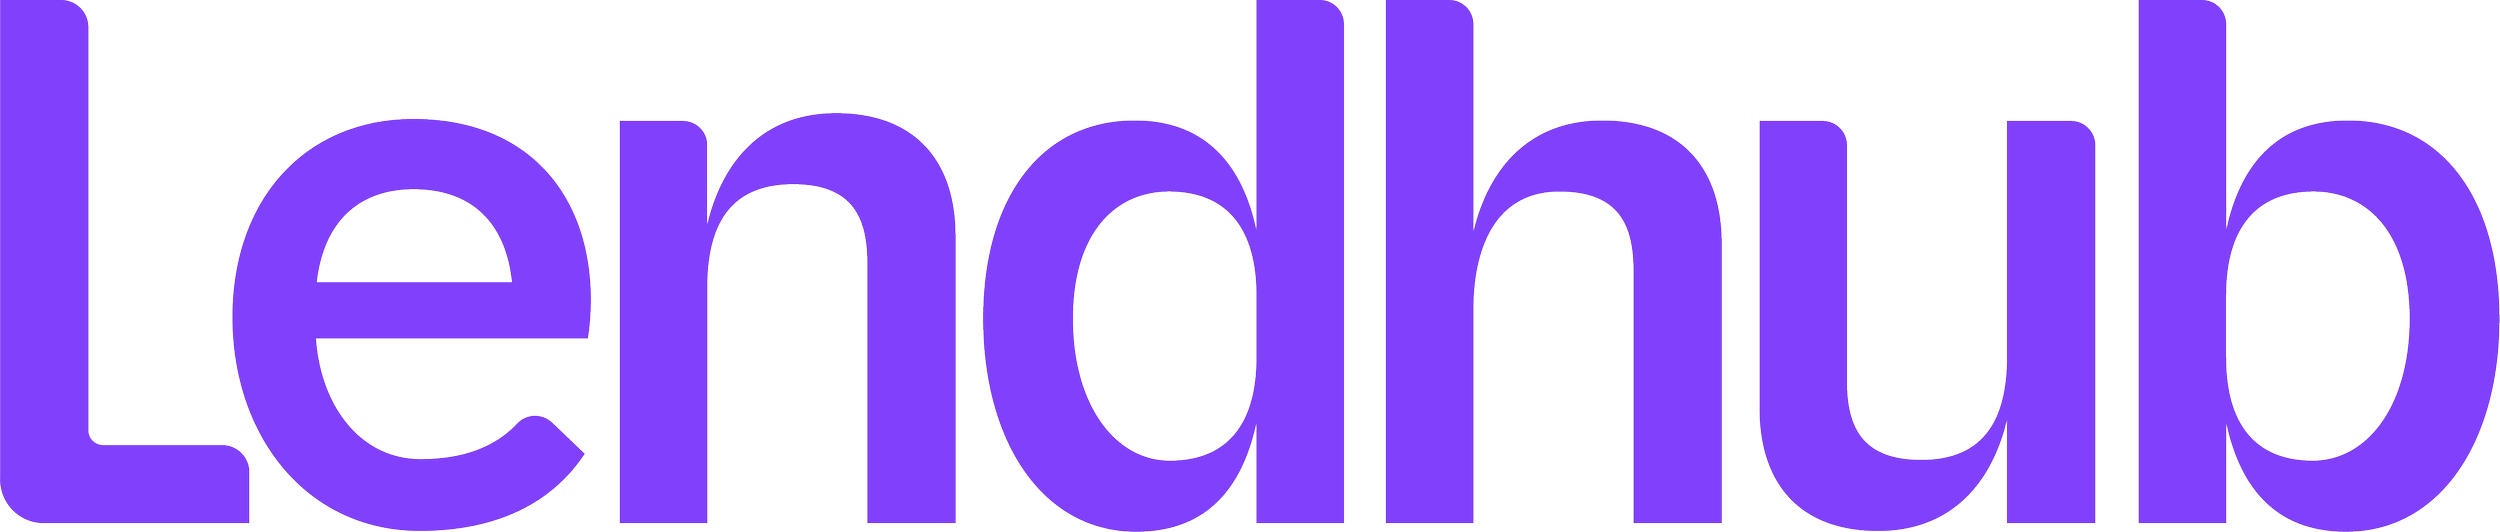 Lendhub _Logo.png